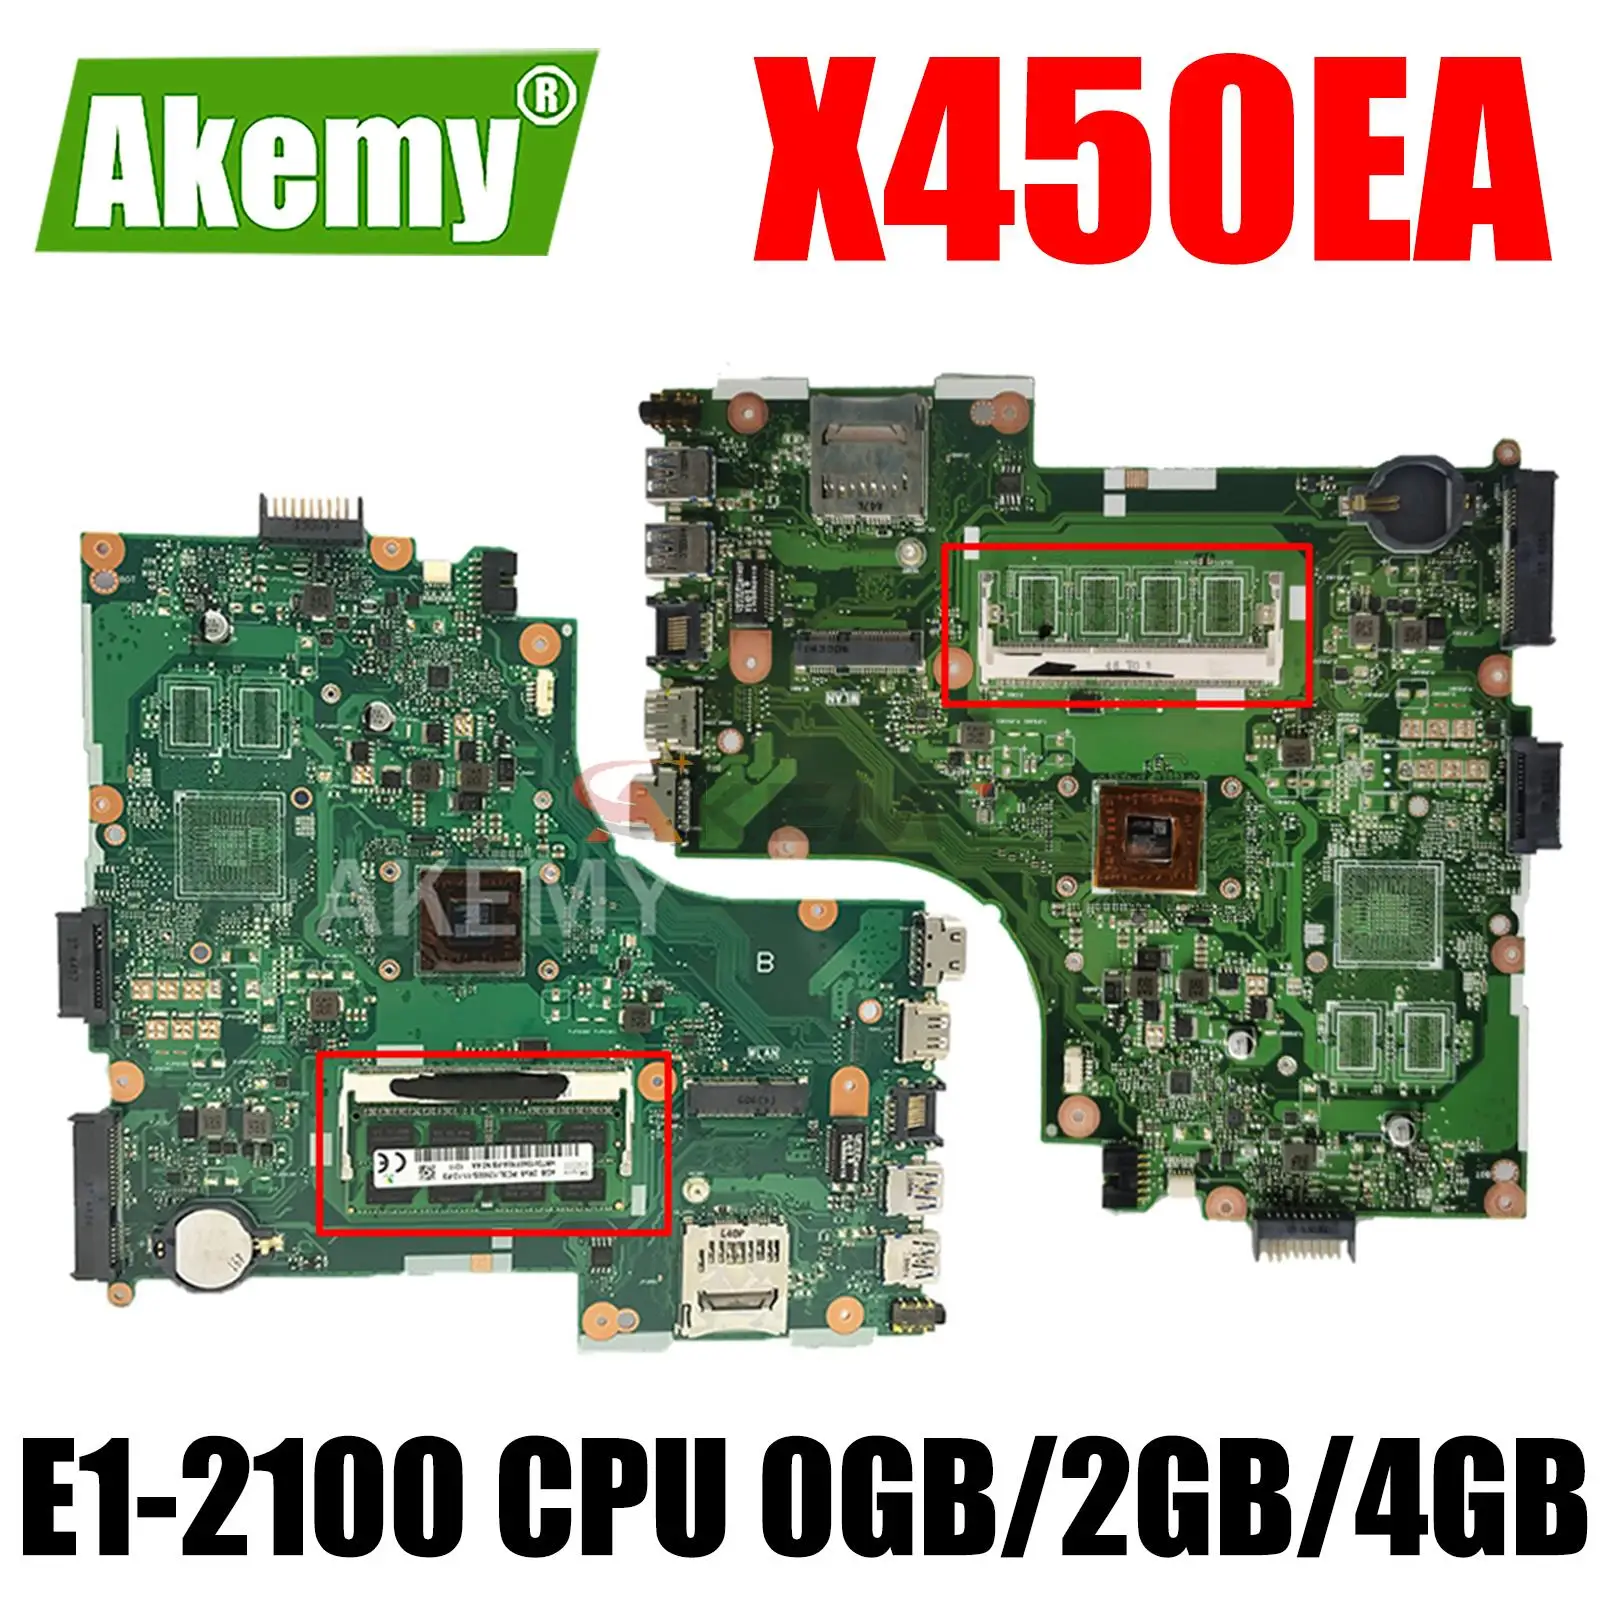 

X450EA Notebook Mainboard with E1-2100 CPU 0GB 2GB 4GB RAM for ASUS X450EA X450E X450EP X452EA X452E A452E Laptop Motherboard